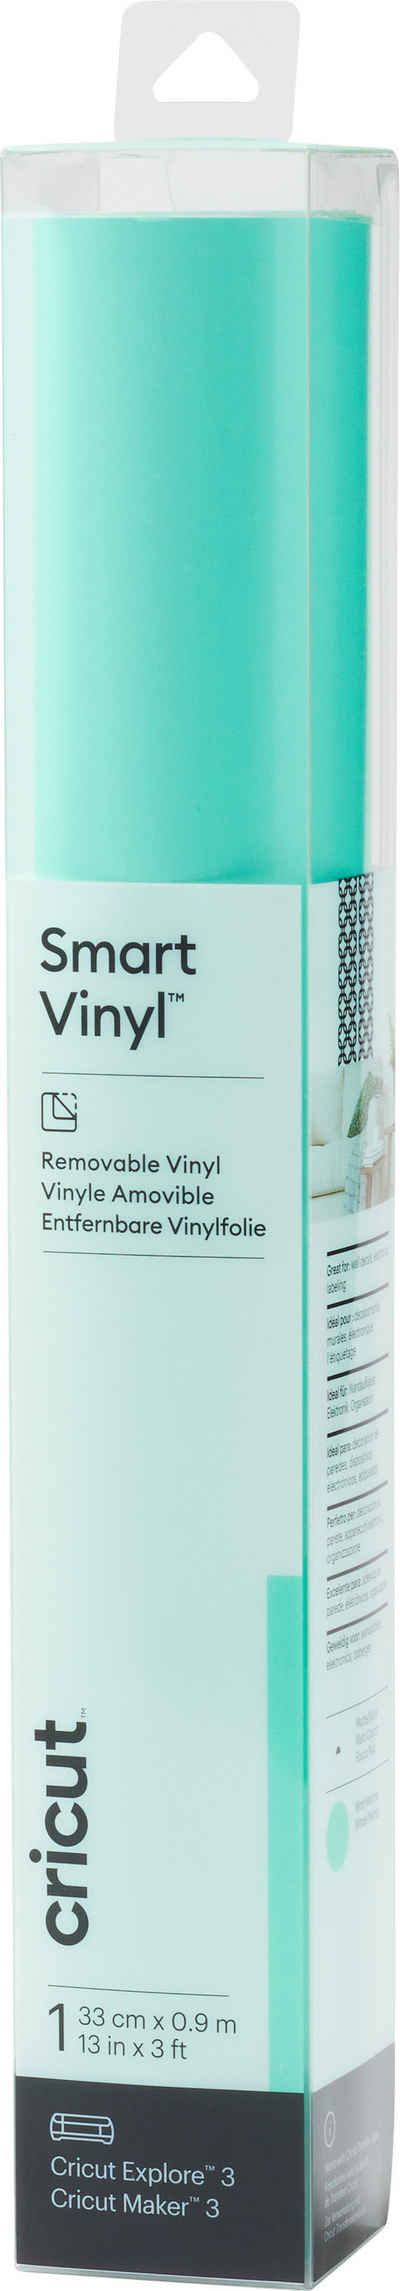 Cricut Dekorationsfolie Vinylfolie Smart Vinyl Removable, selbstklebend 90 cm x 33 cm